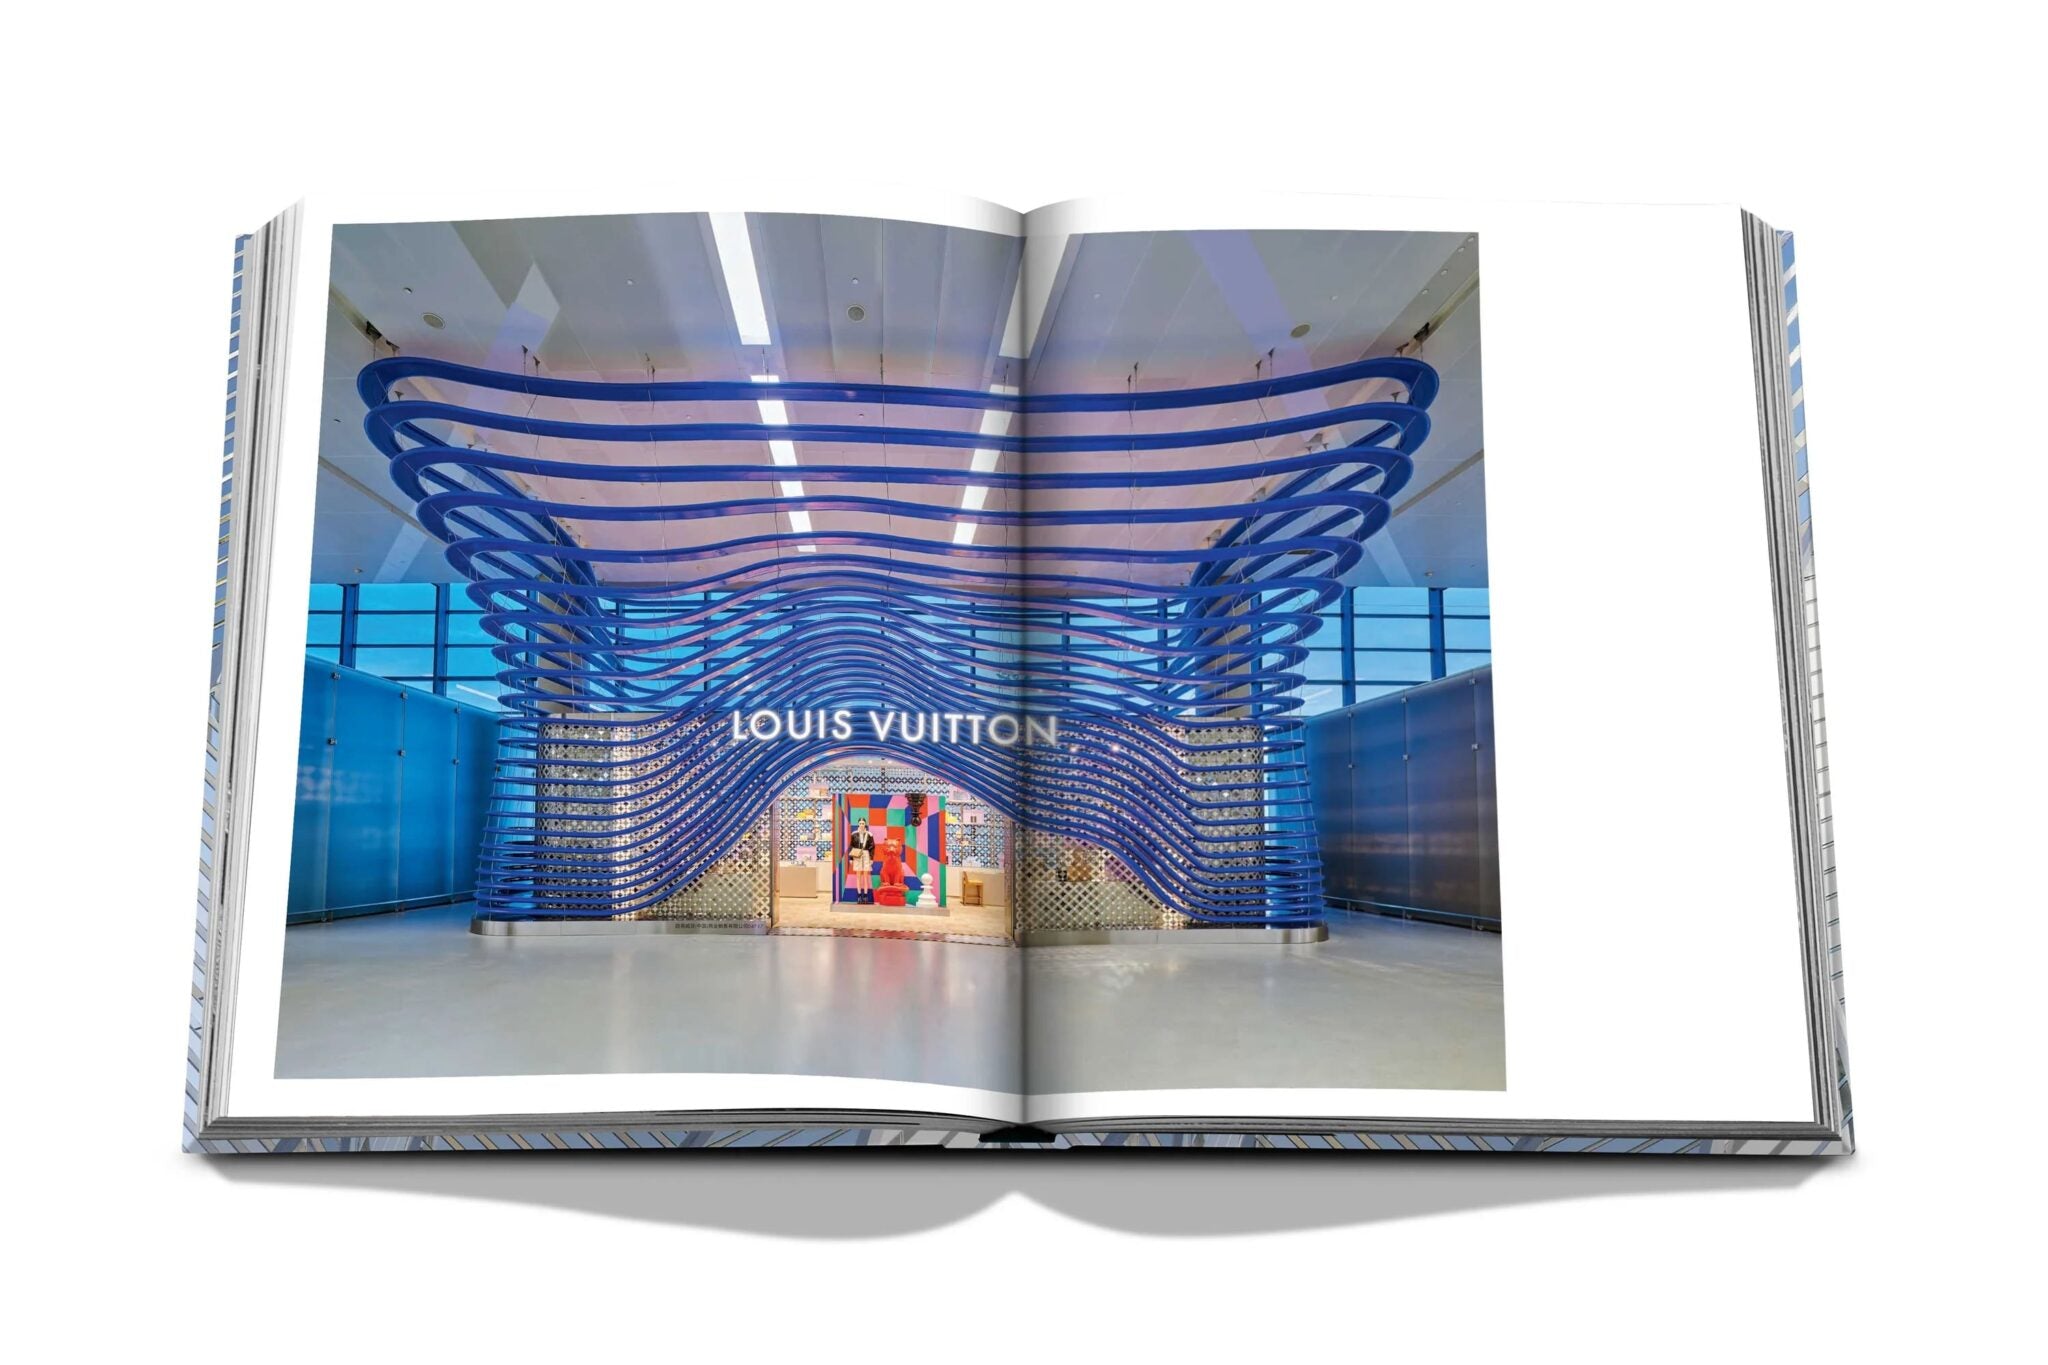 Assouline Louis Vuitton Skin: Architectuur van luxe (Seoul-editie)